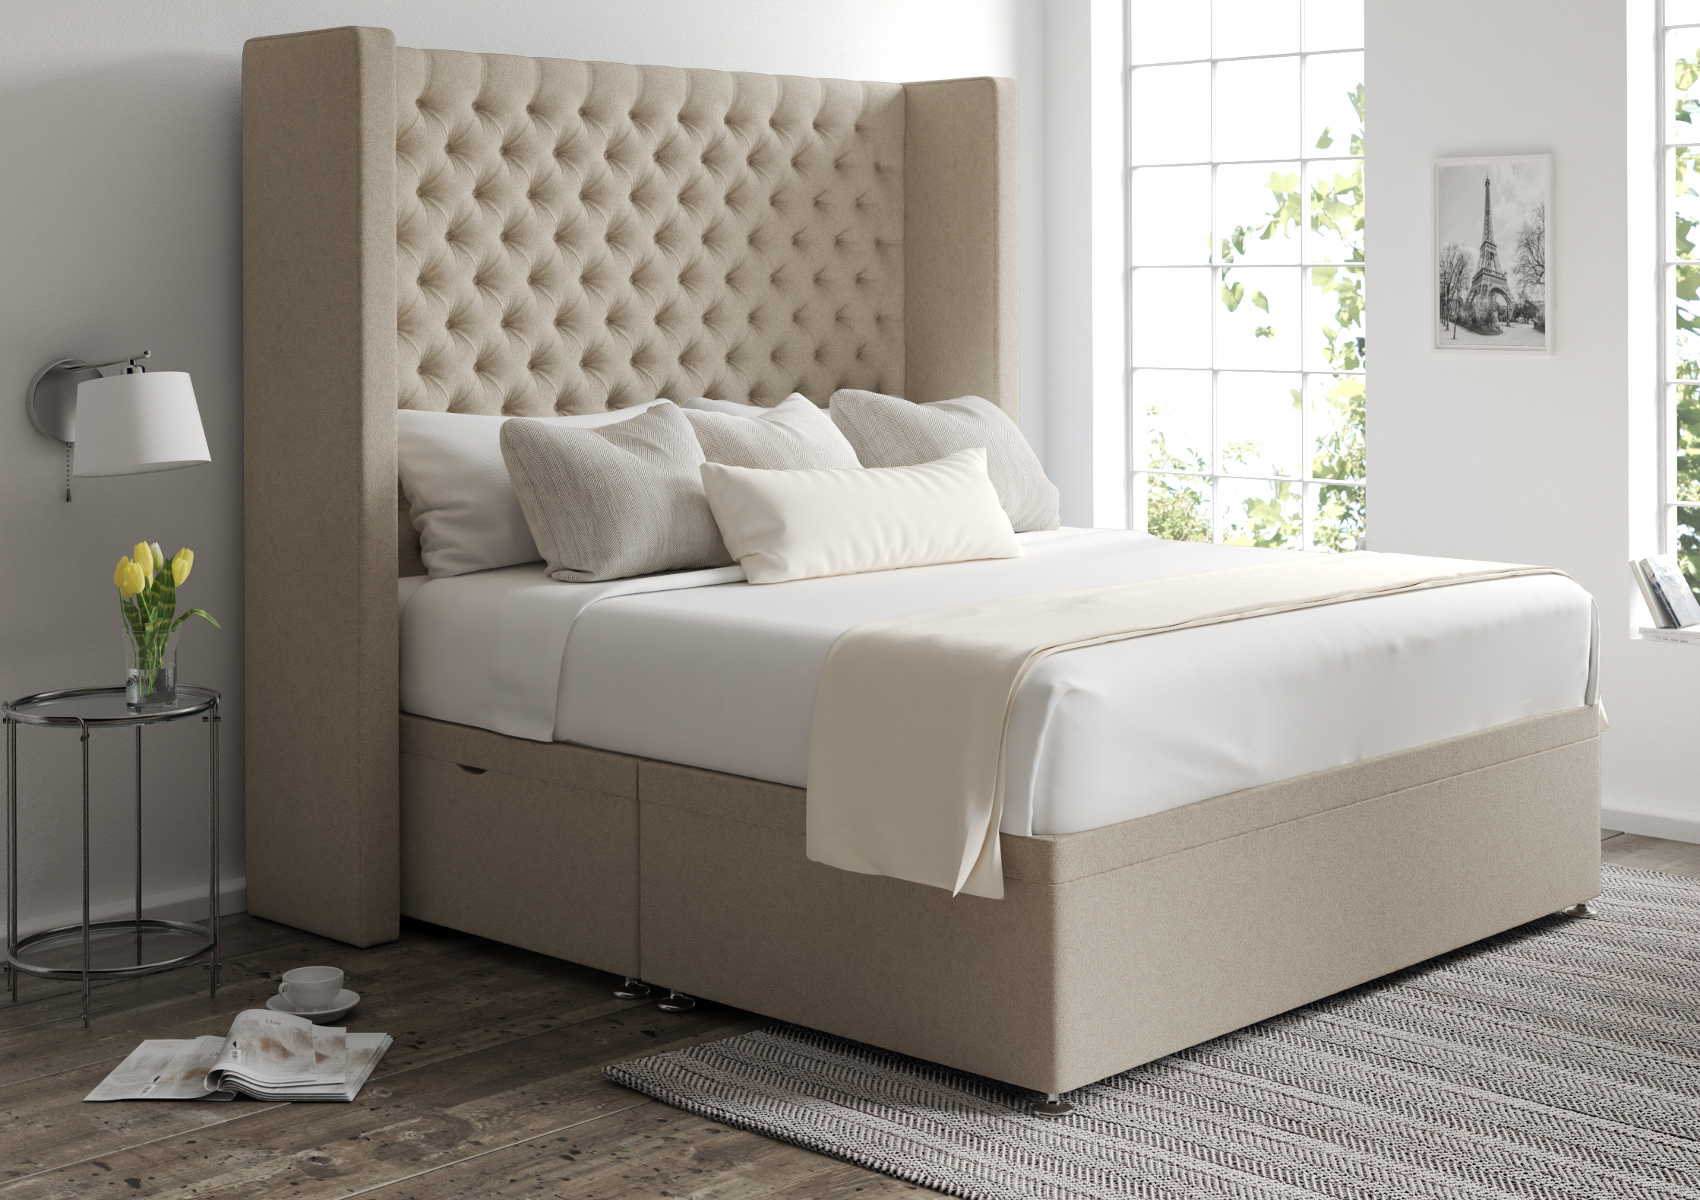 View Emma Trebla Flax Upholstered Double Ottoman Bed Time4Sleep information